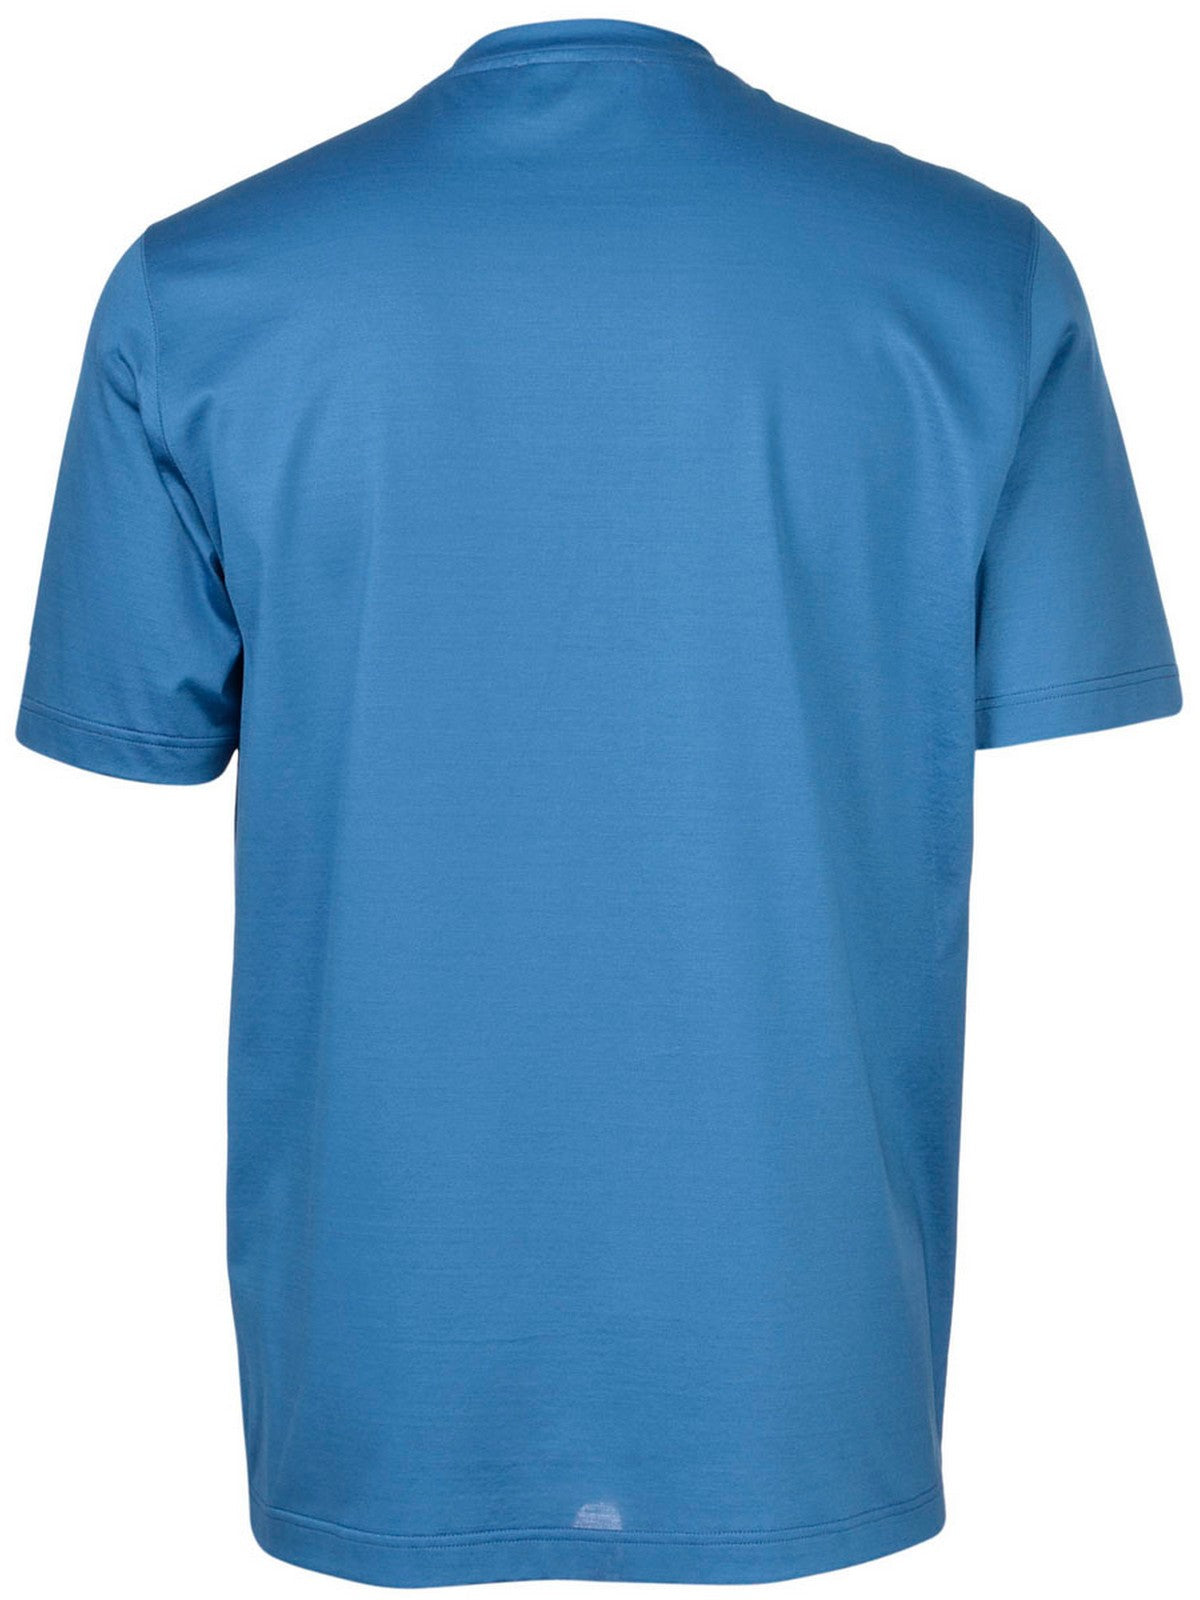 GRAN SASSO T-Shirt et Polo Hommes 60133/74002 665 Bleu